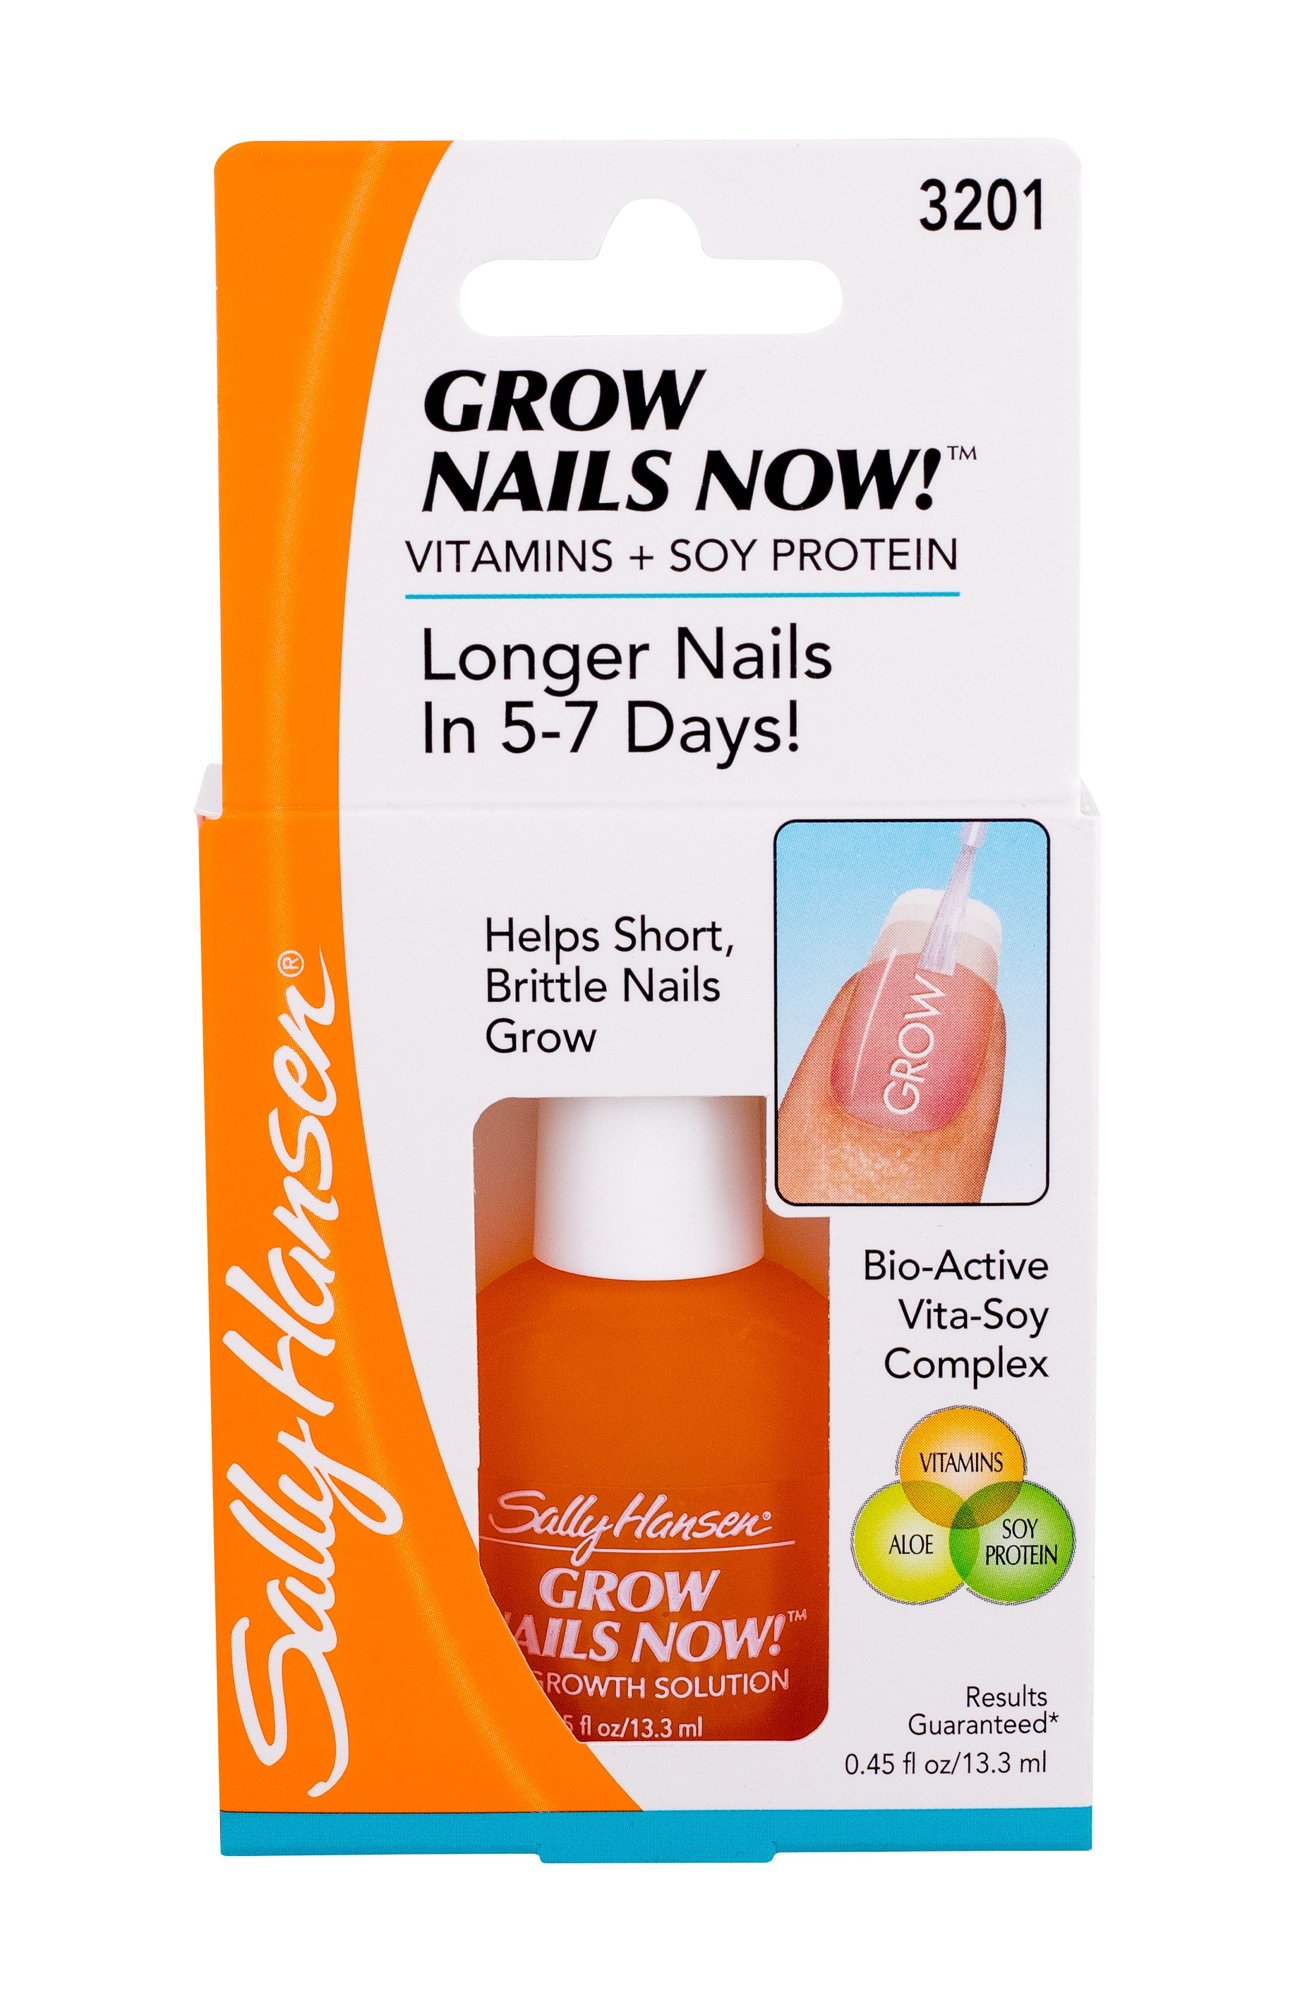 Sally Hansen Grow Nails Now! nagų priežiūrai